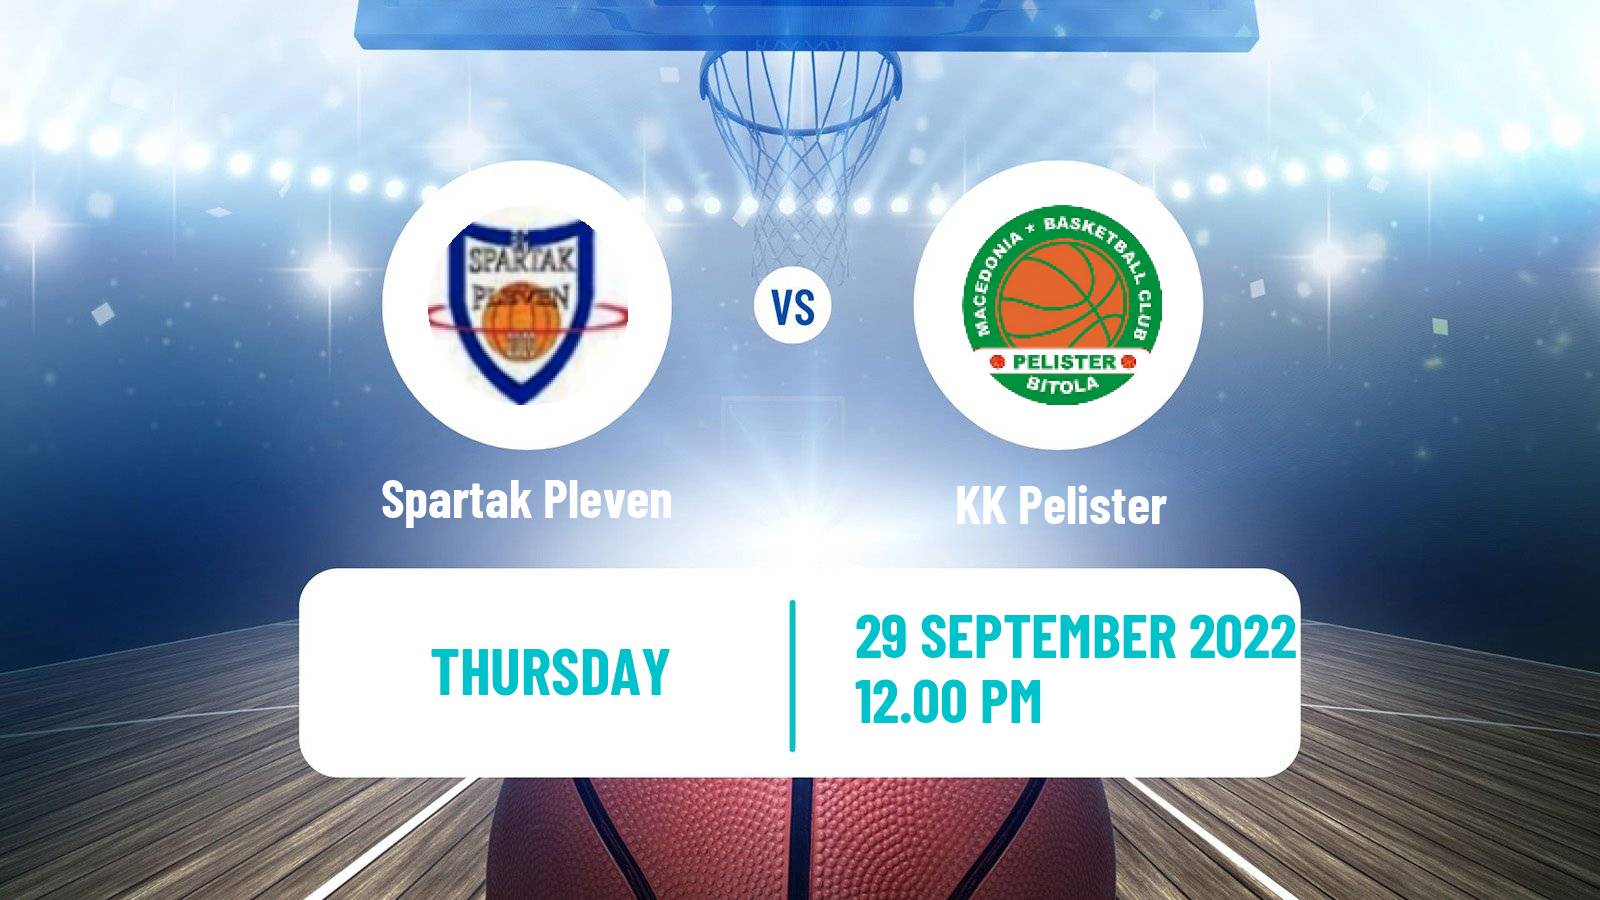 Basketball Club Friendly Basketball Spartak Pleven - Pelister